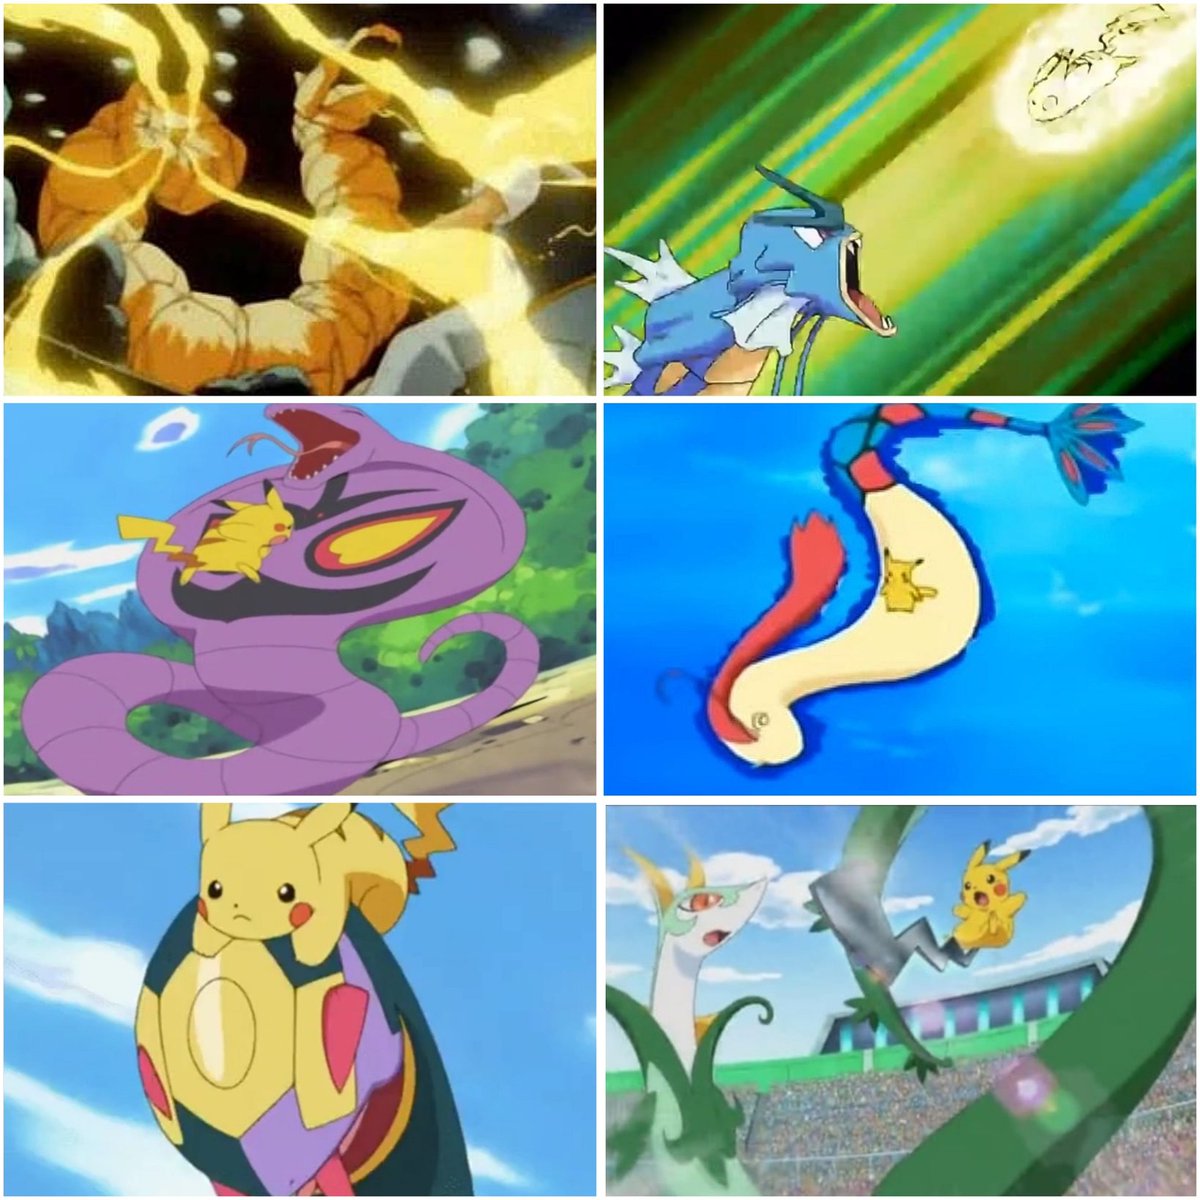 When serpent Pokemon becomes victim of Ash's Pikachu. #アニポケ #Pokemon #ポケモン